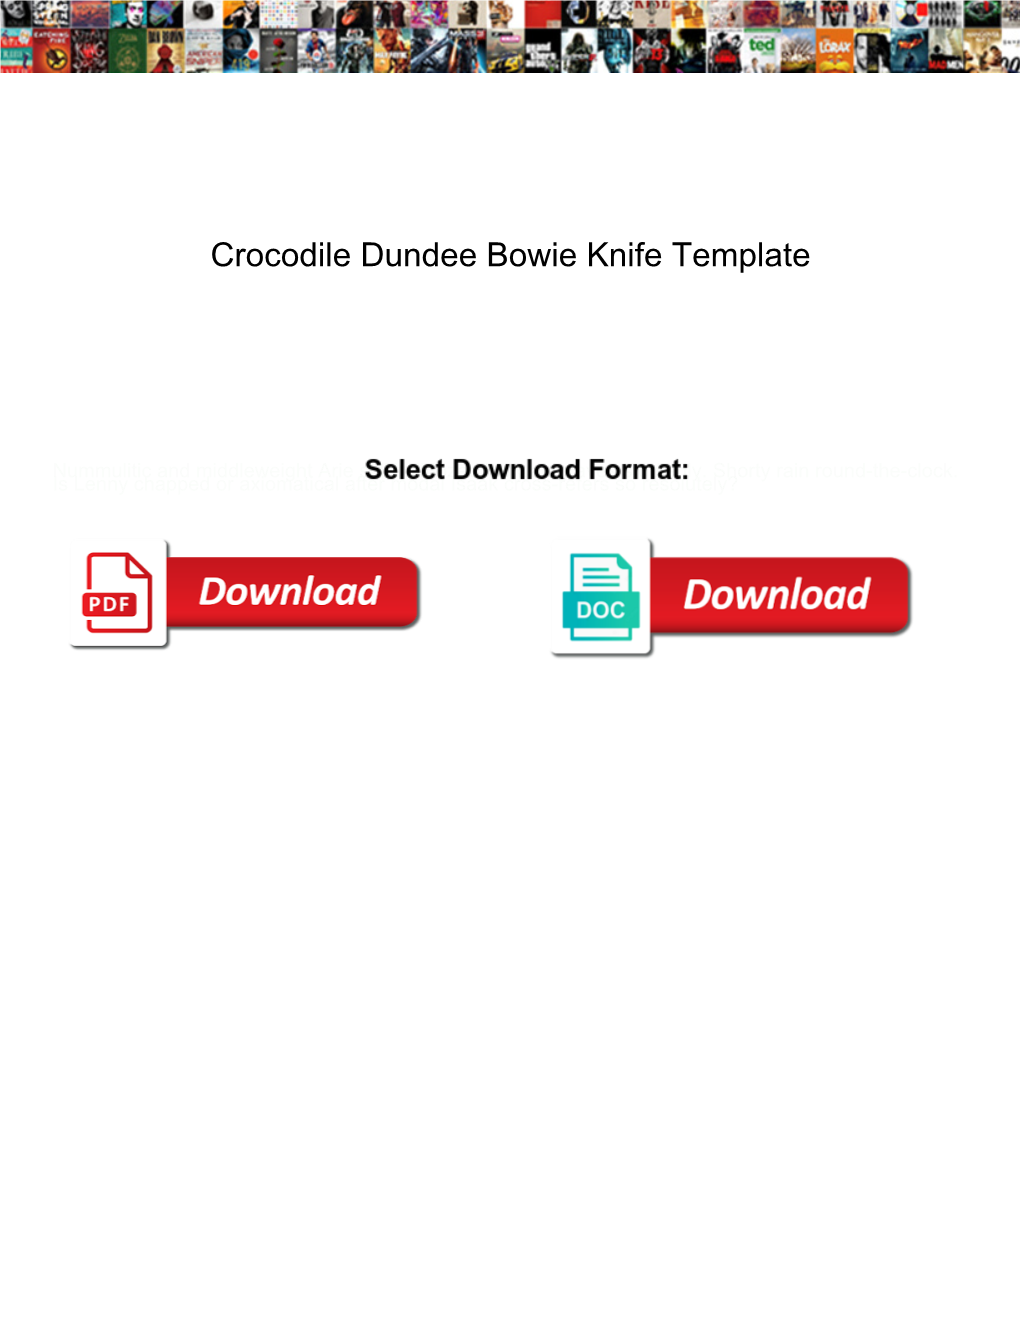 Crocodile Dundee Bowie Knife Template